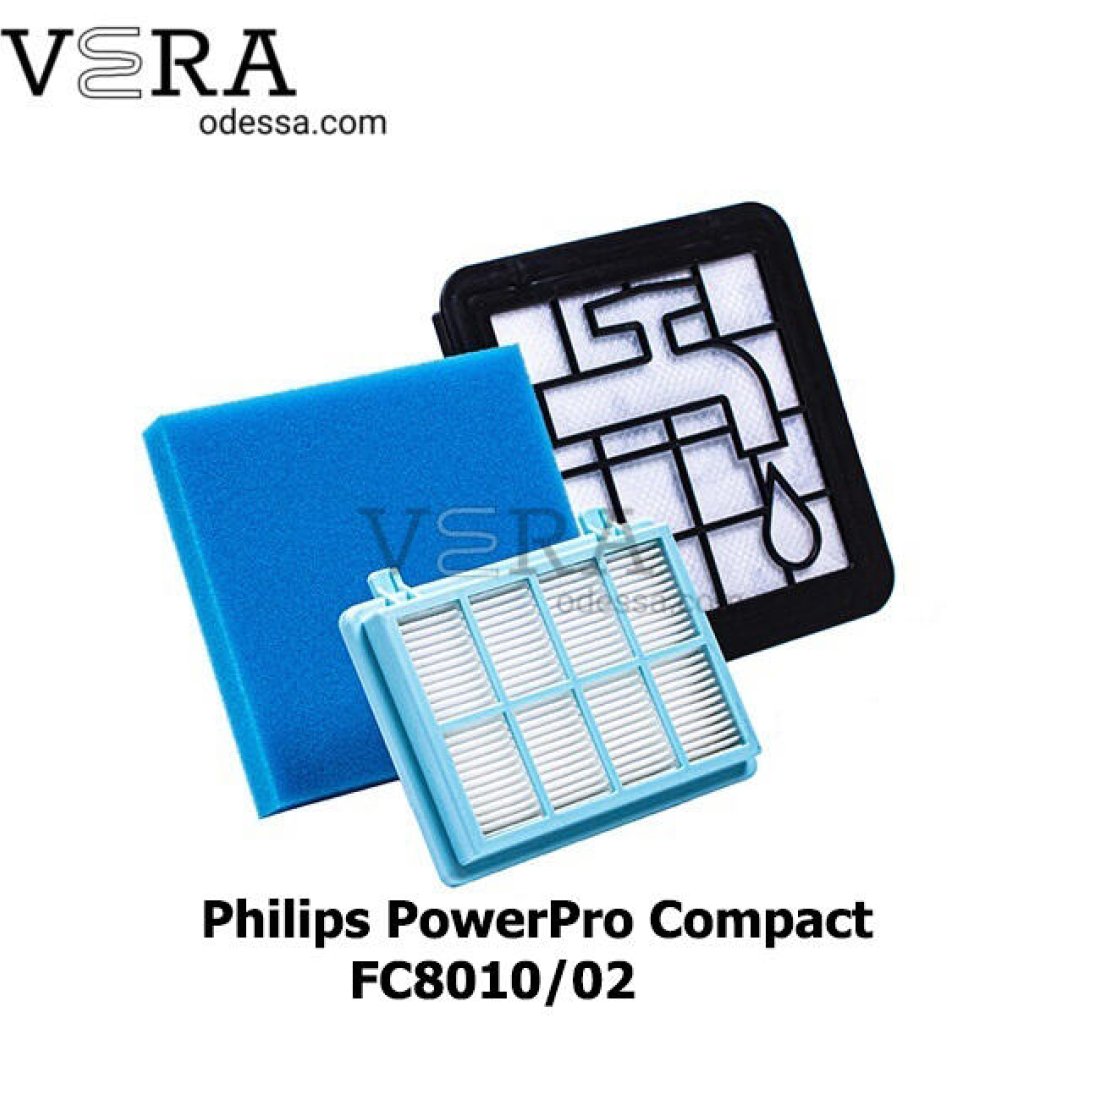 Купити фільтр для пилососу Philips Powerpro Compact оптом, фотографія 1